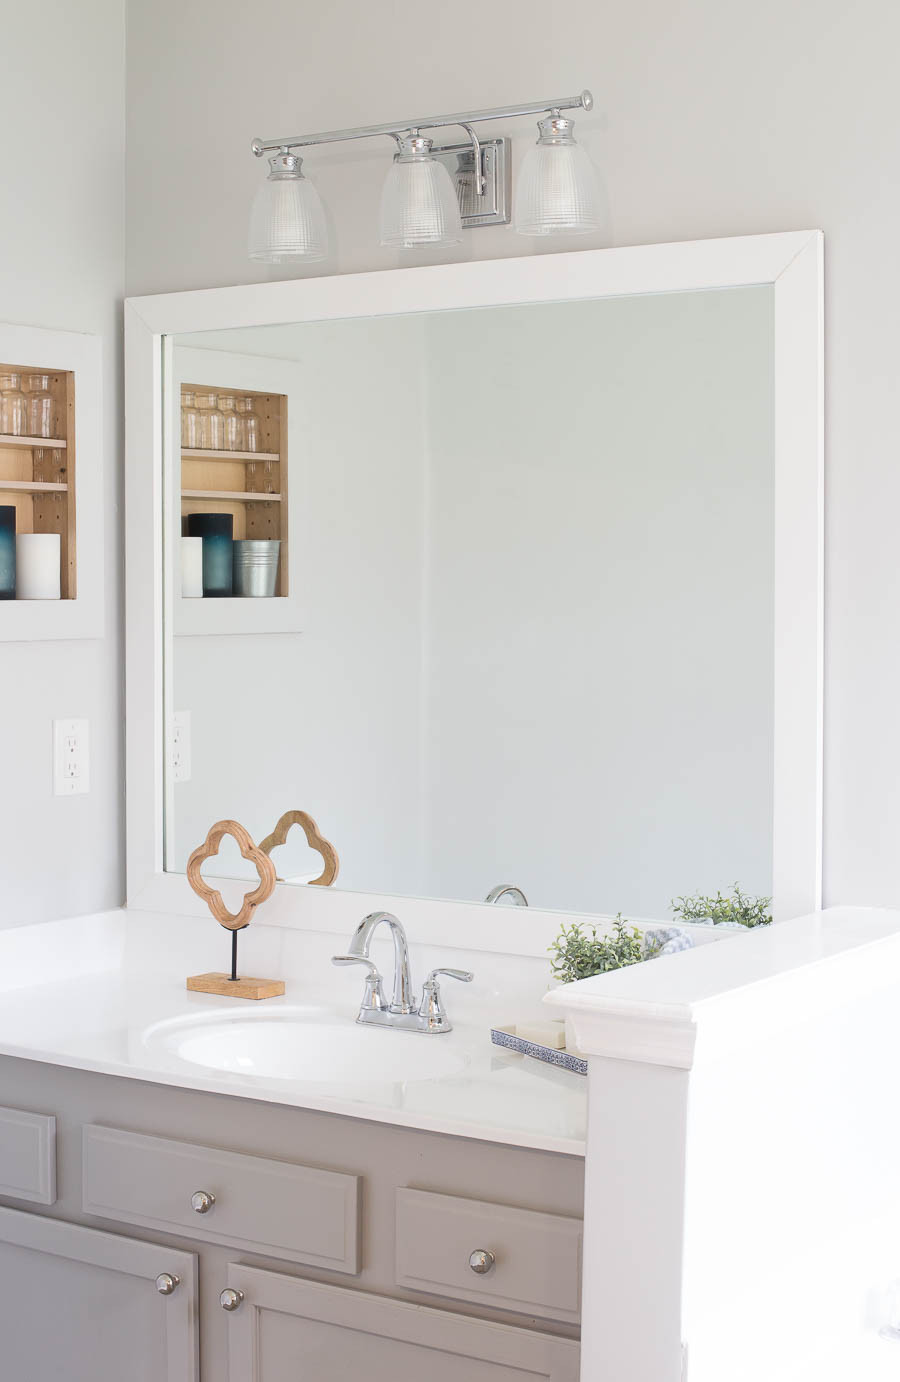 Framed Bathroom Mirror Ideas
 How to Frame a Bathroom Mirror Easy DIY project